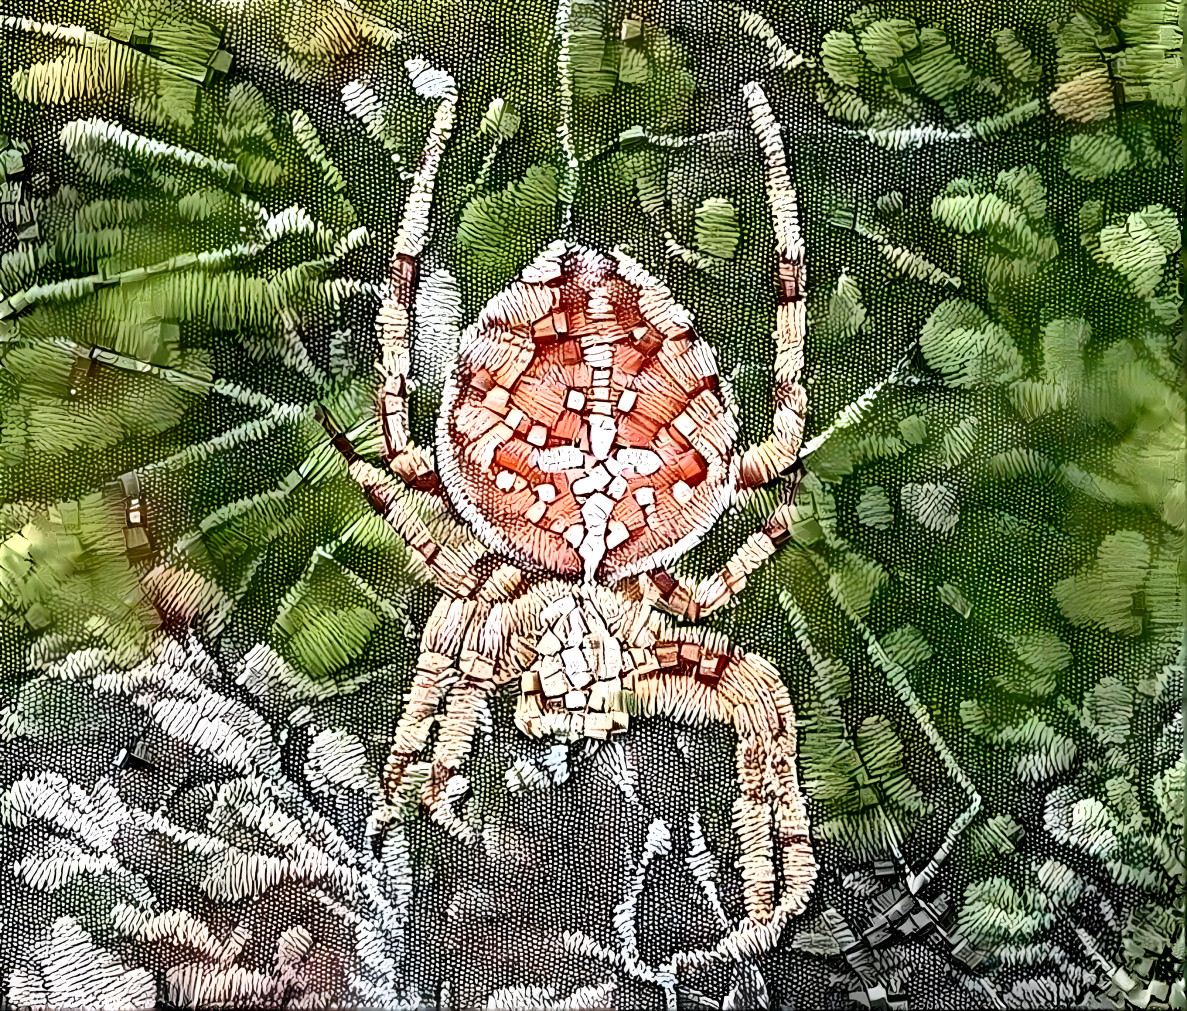 Spider embroidery redo